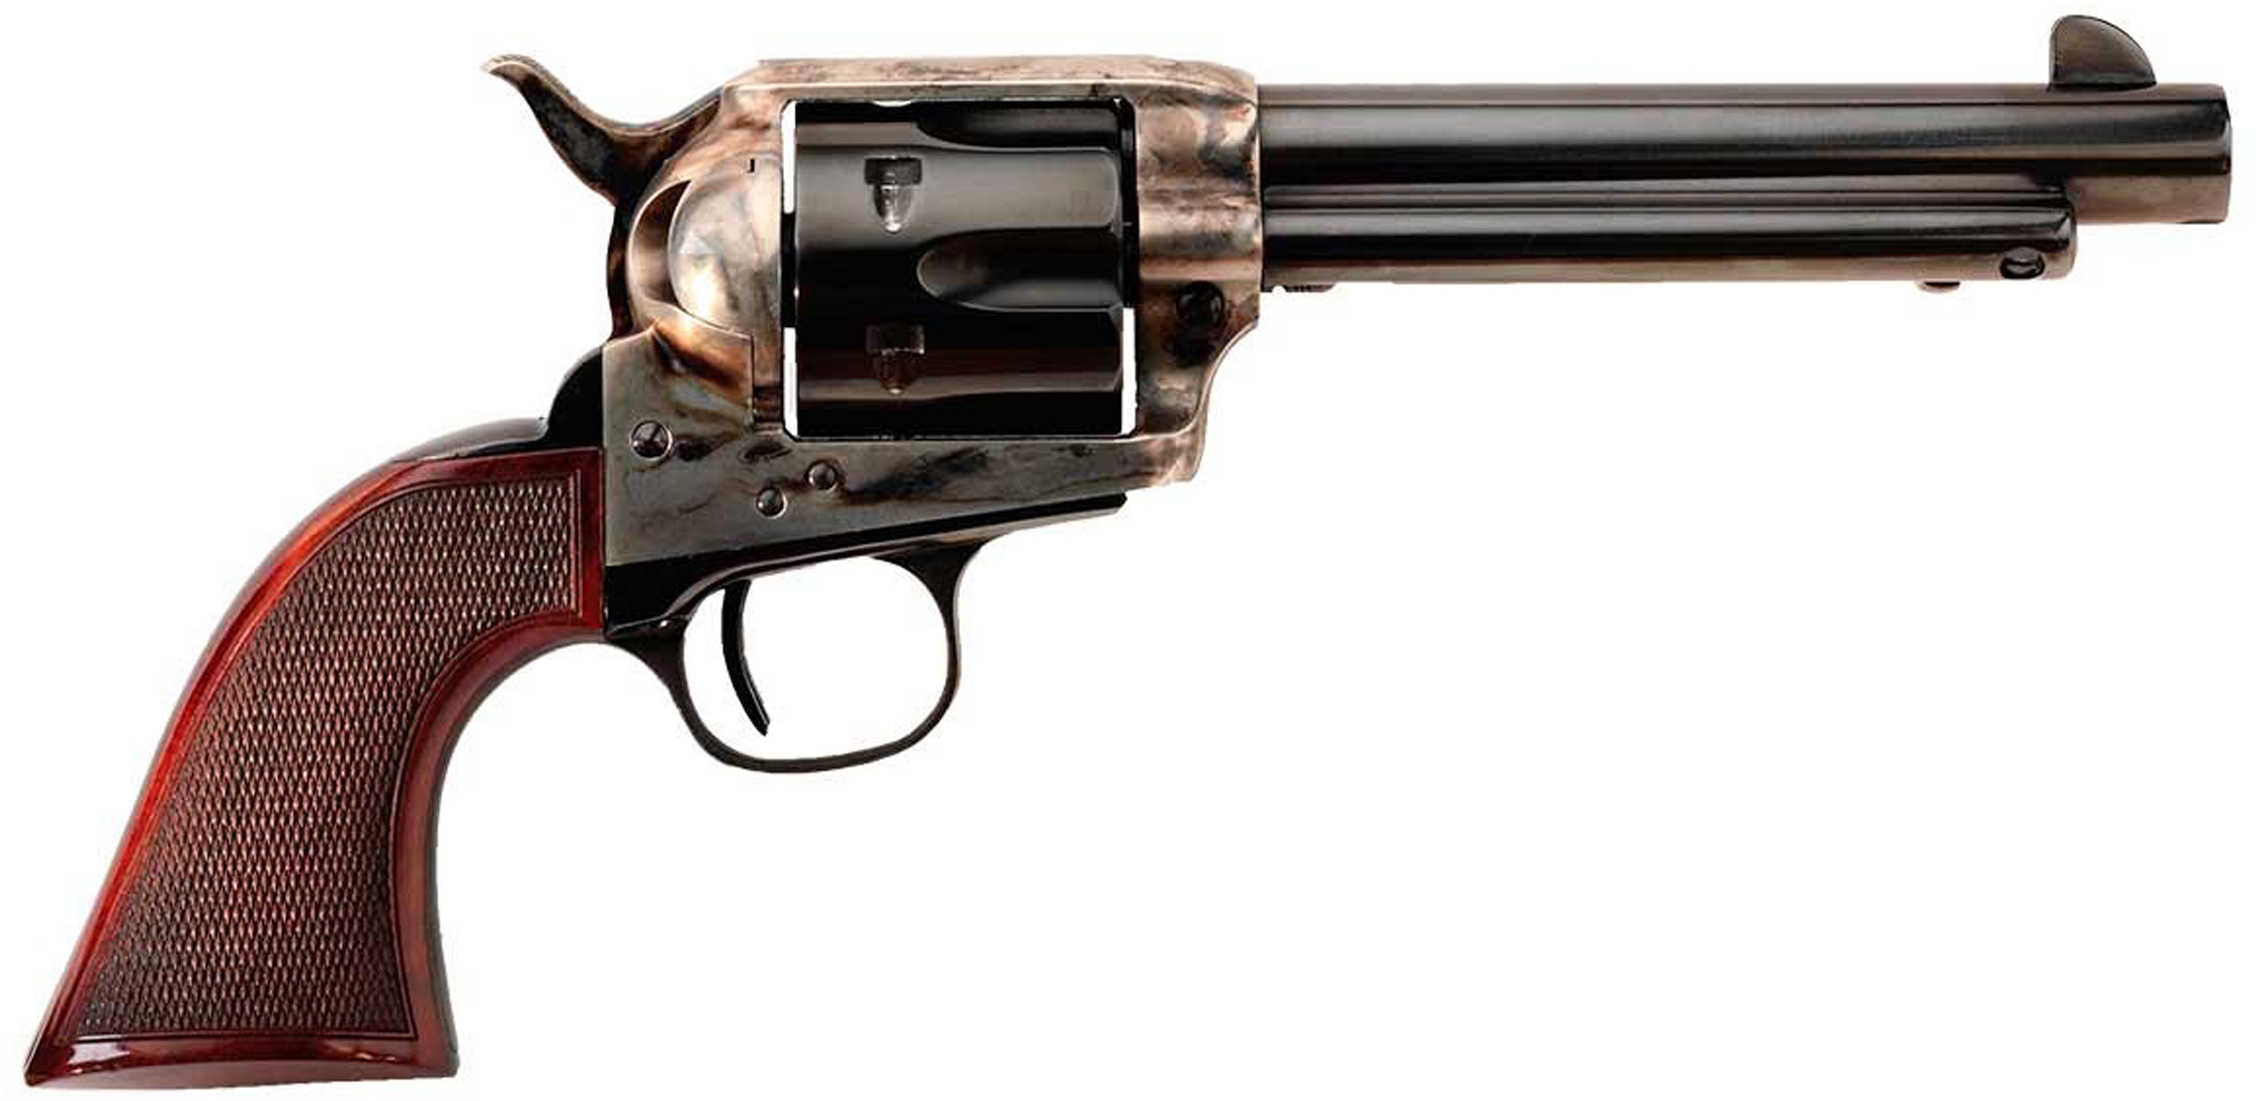 Taylor's & Company Revolver The Smoke Wagon Standard 45 Colt 4.75" Barrel 6 Round